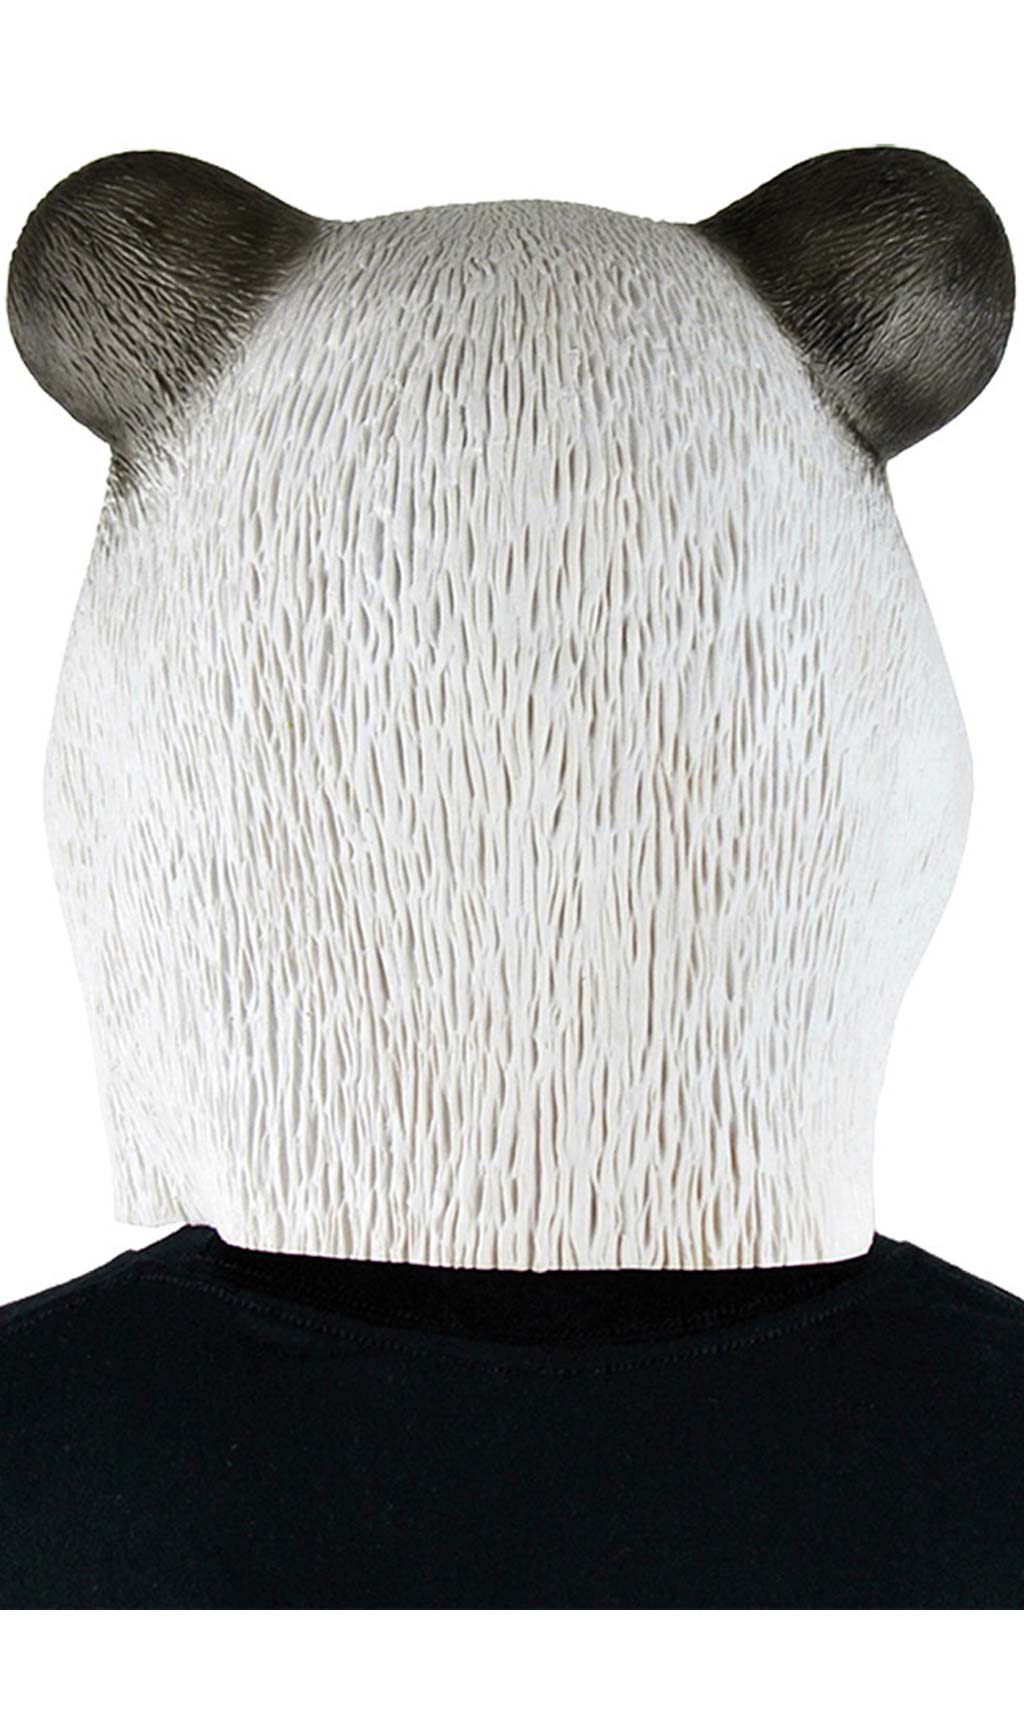 Máscara em latex de Urso Panda